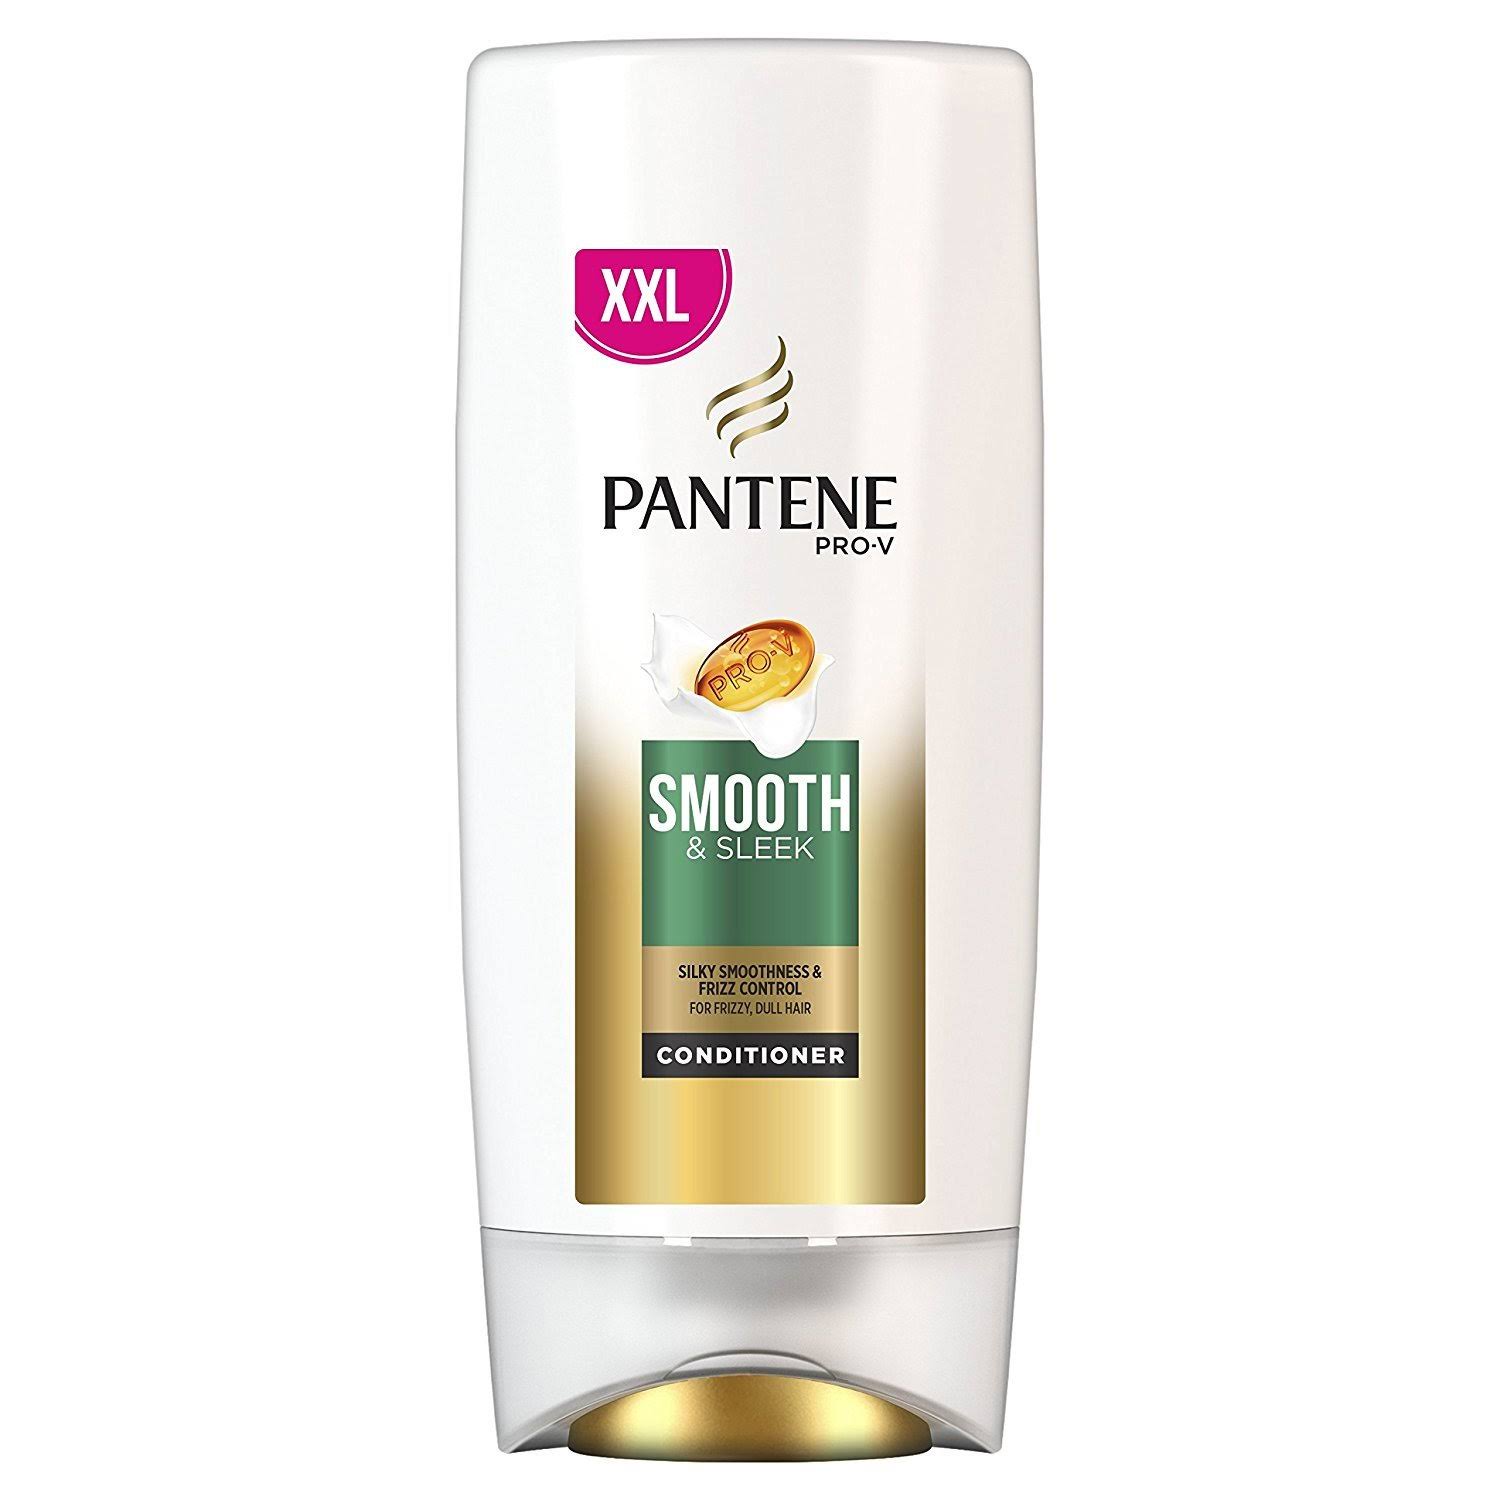 Pantene Pro-V Smooth & Sleek Conditioner - 700ml